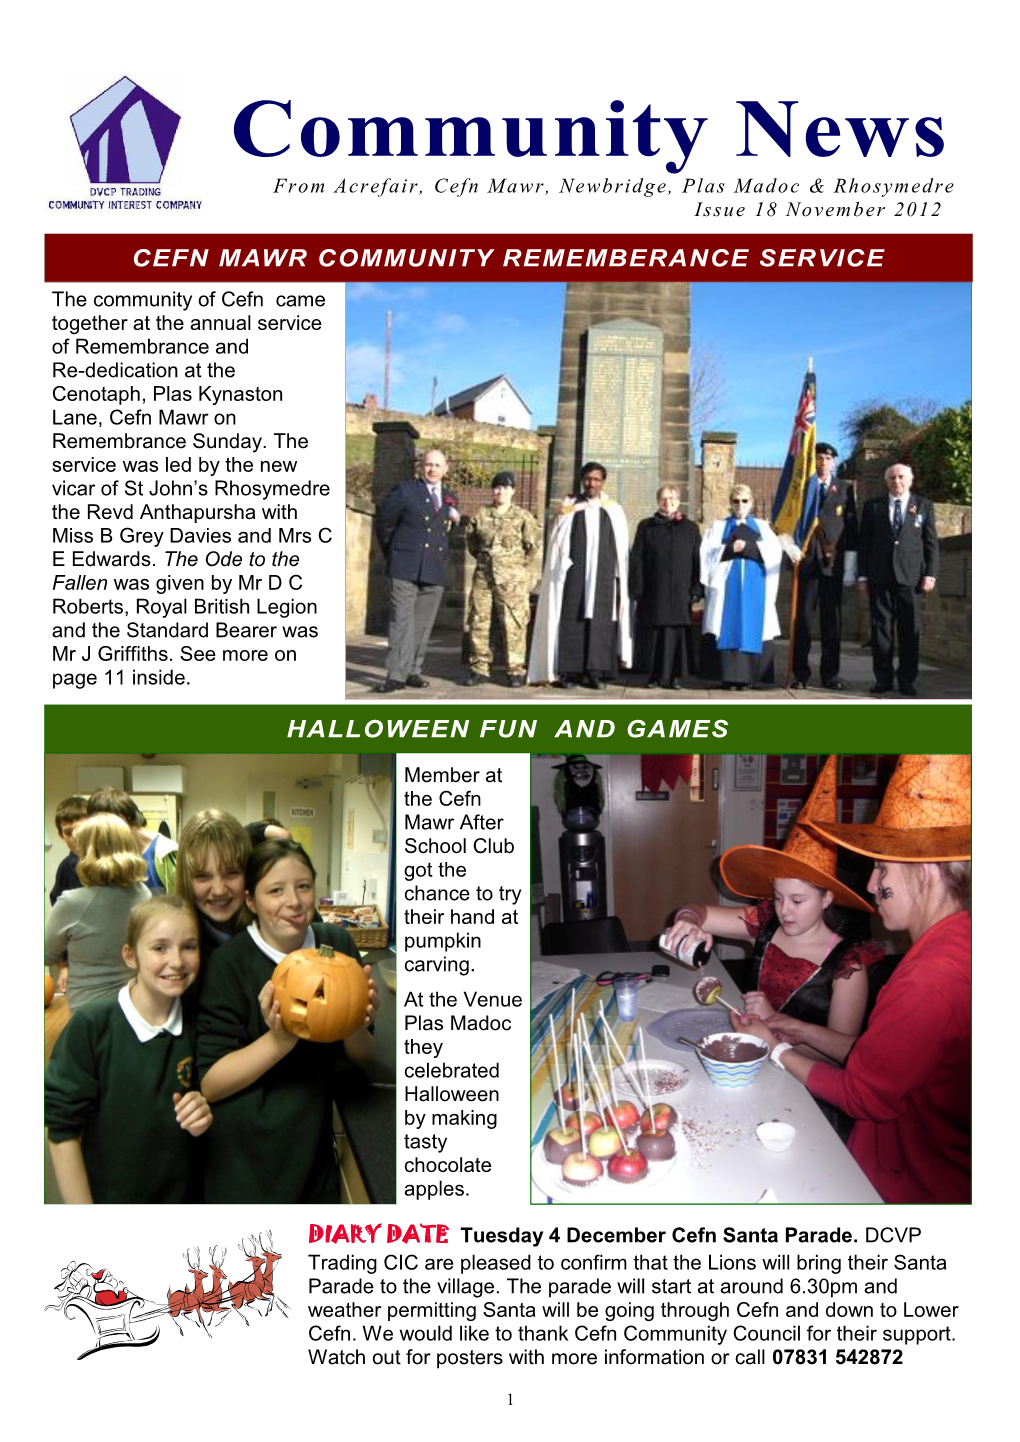 Community News from Acrefair, Cefn Mawr, Newbridge, Plas Madoc & Rhosymedre Issue 18 November 2012